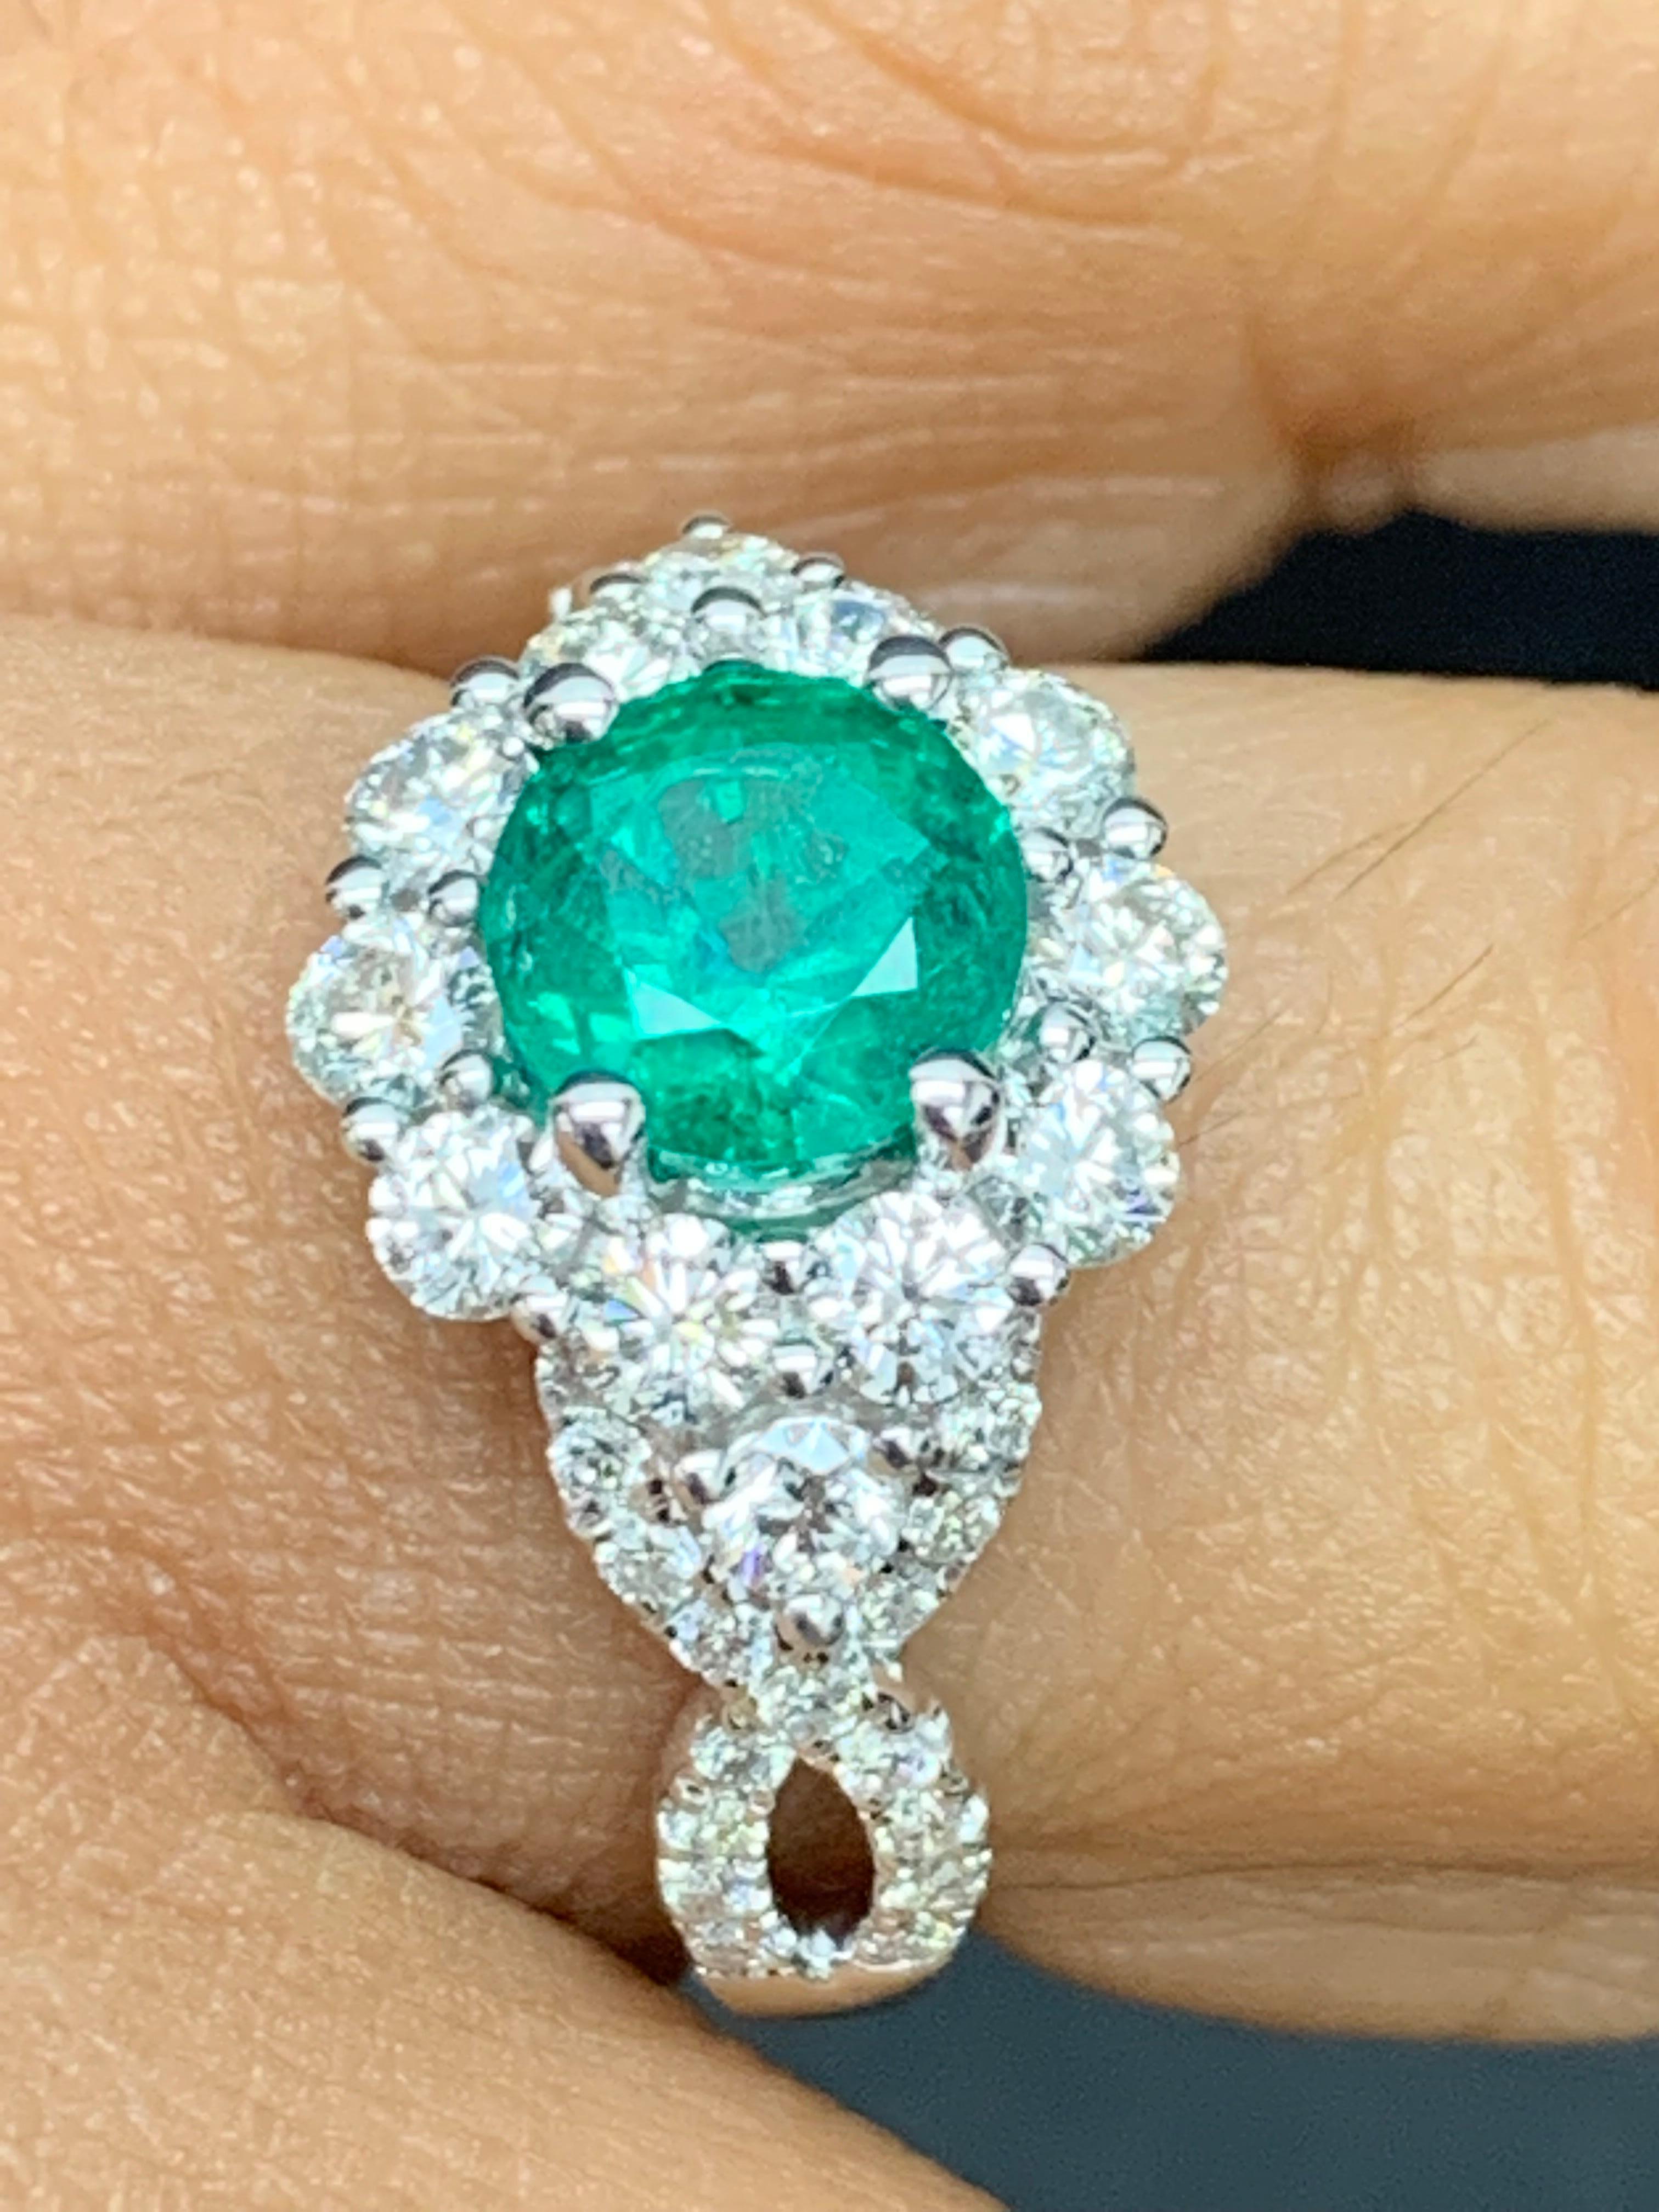 30 carat diamond ring